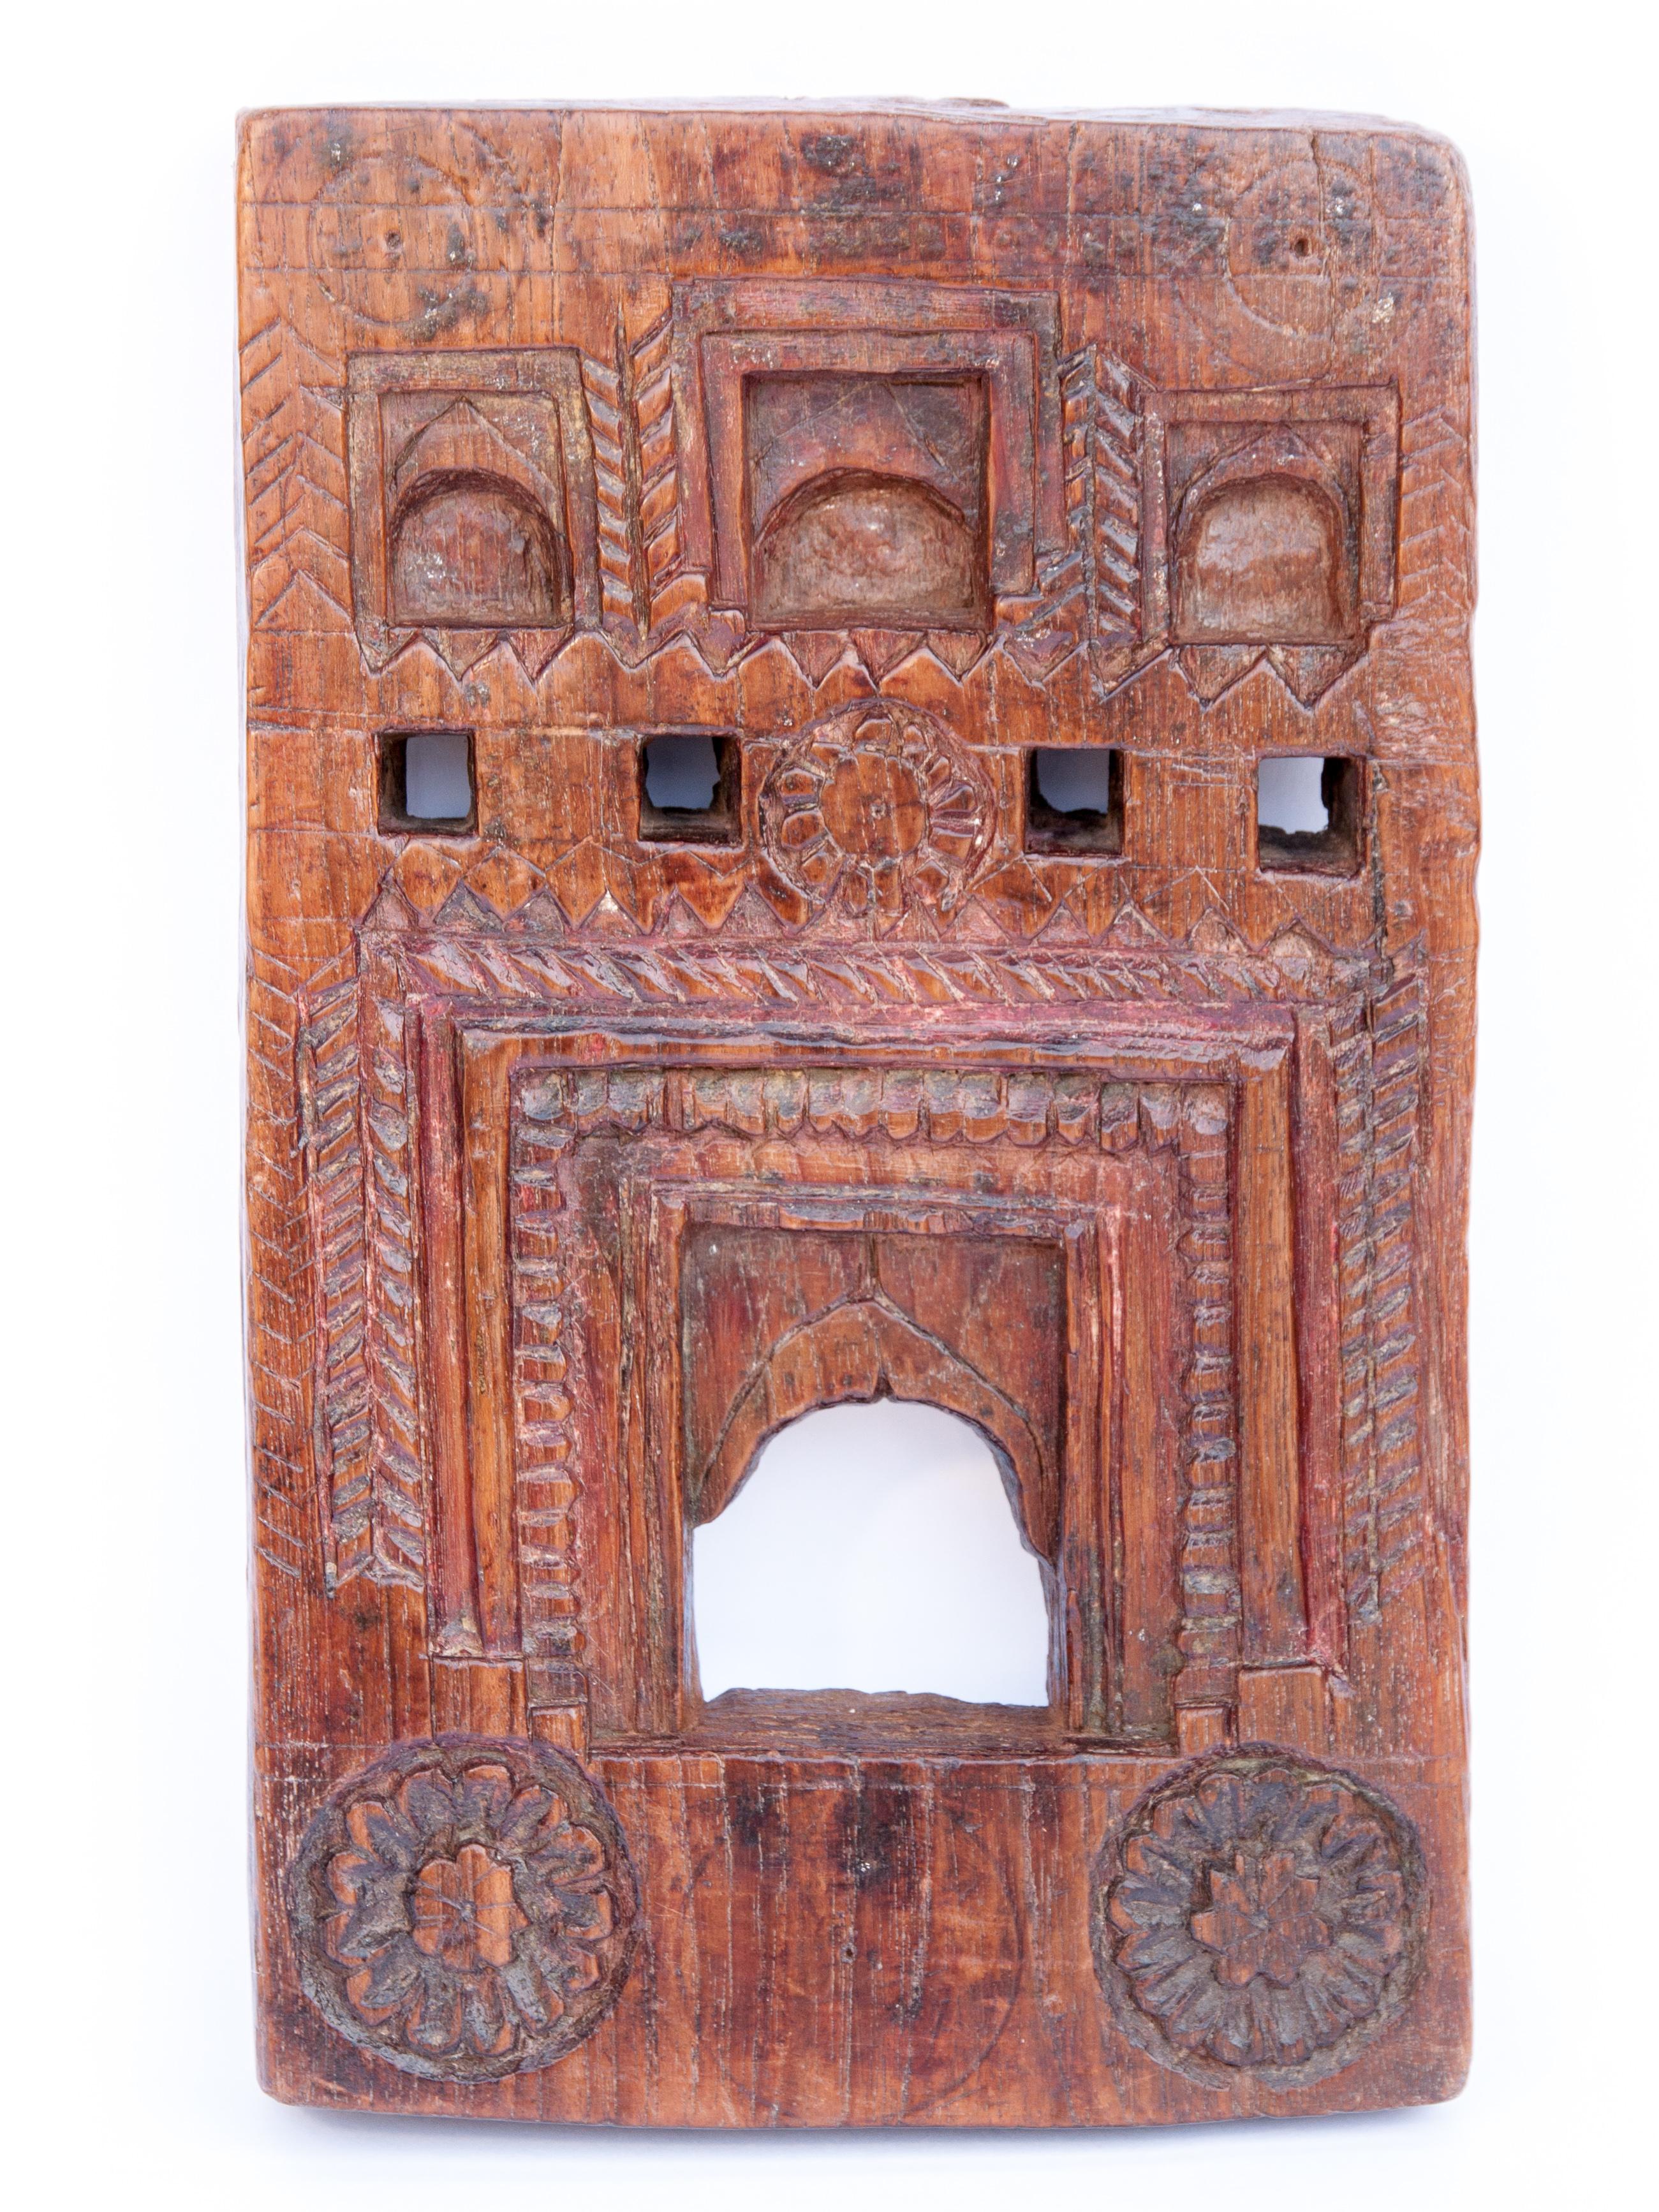 Folk Art Set of 3 Vintage Carved Wood Votive or Picture Frames, Mid-20th Century, India.